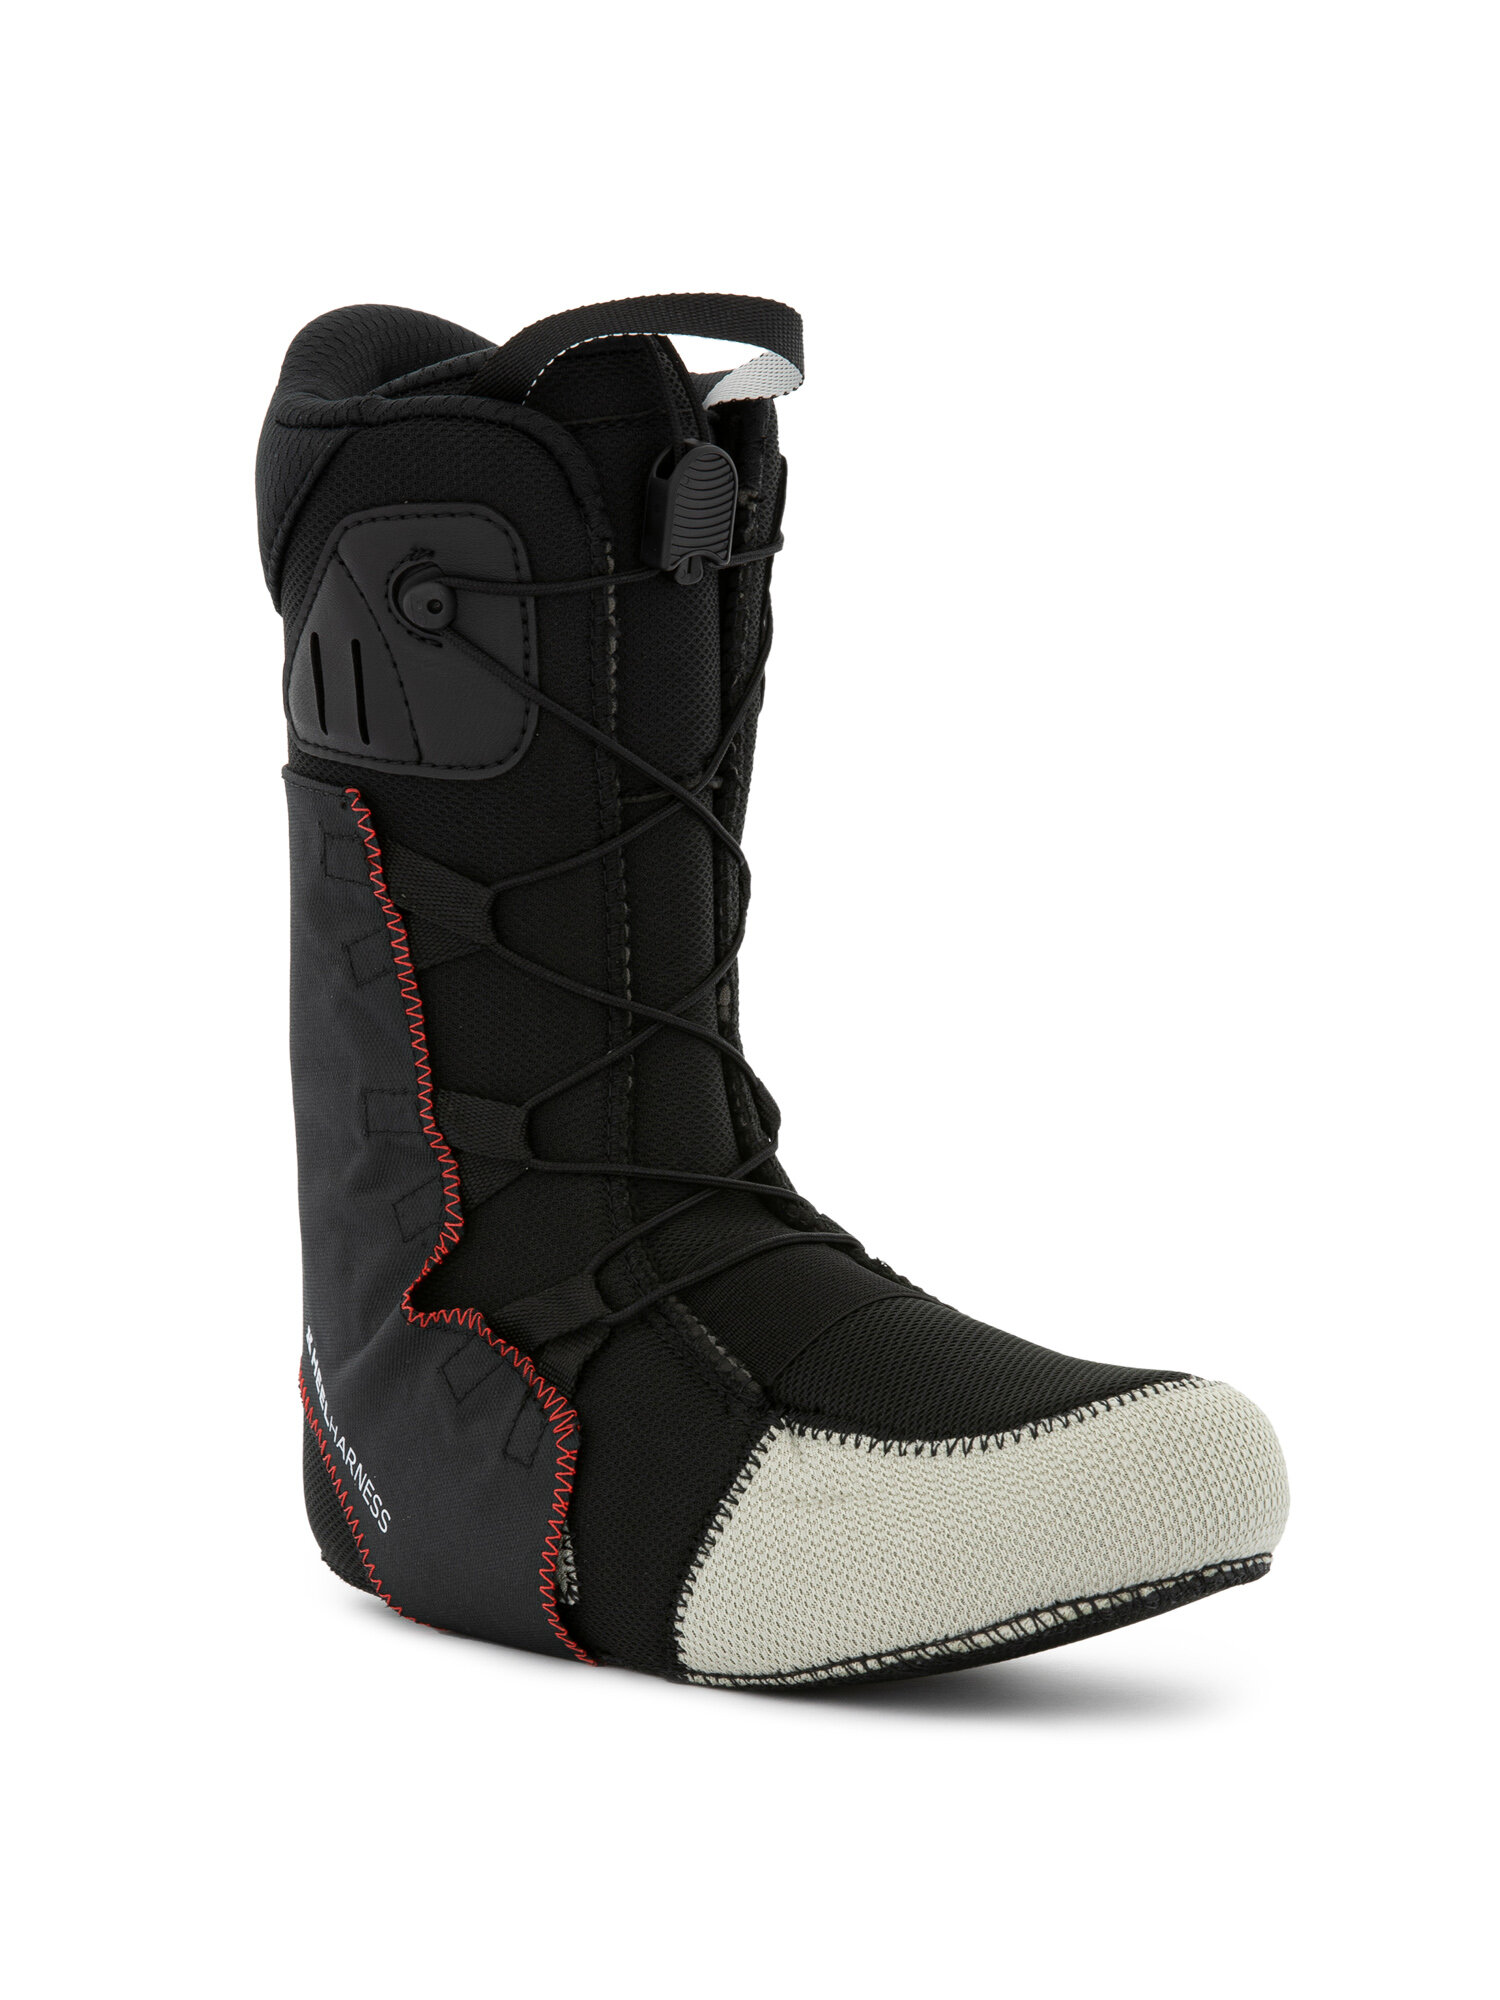 Ботинки для сноуборда DEELUXE Id Dual Boa Black (см:28,5)